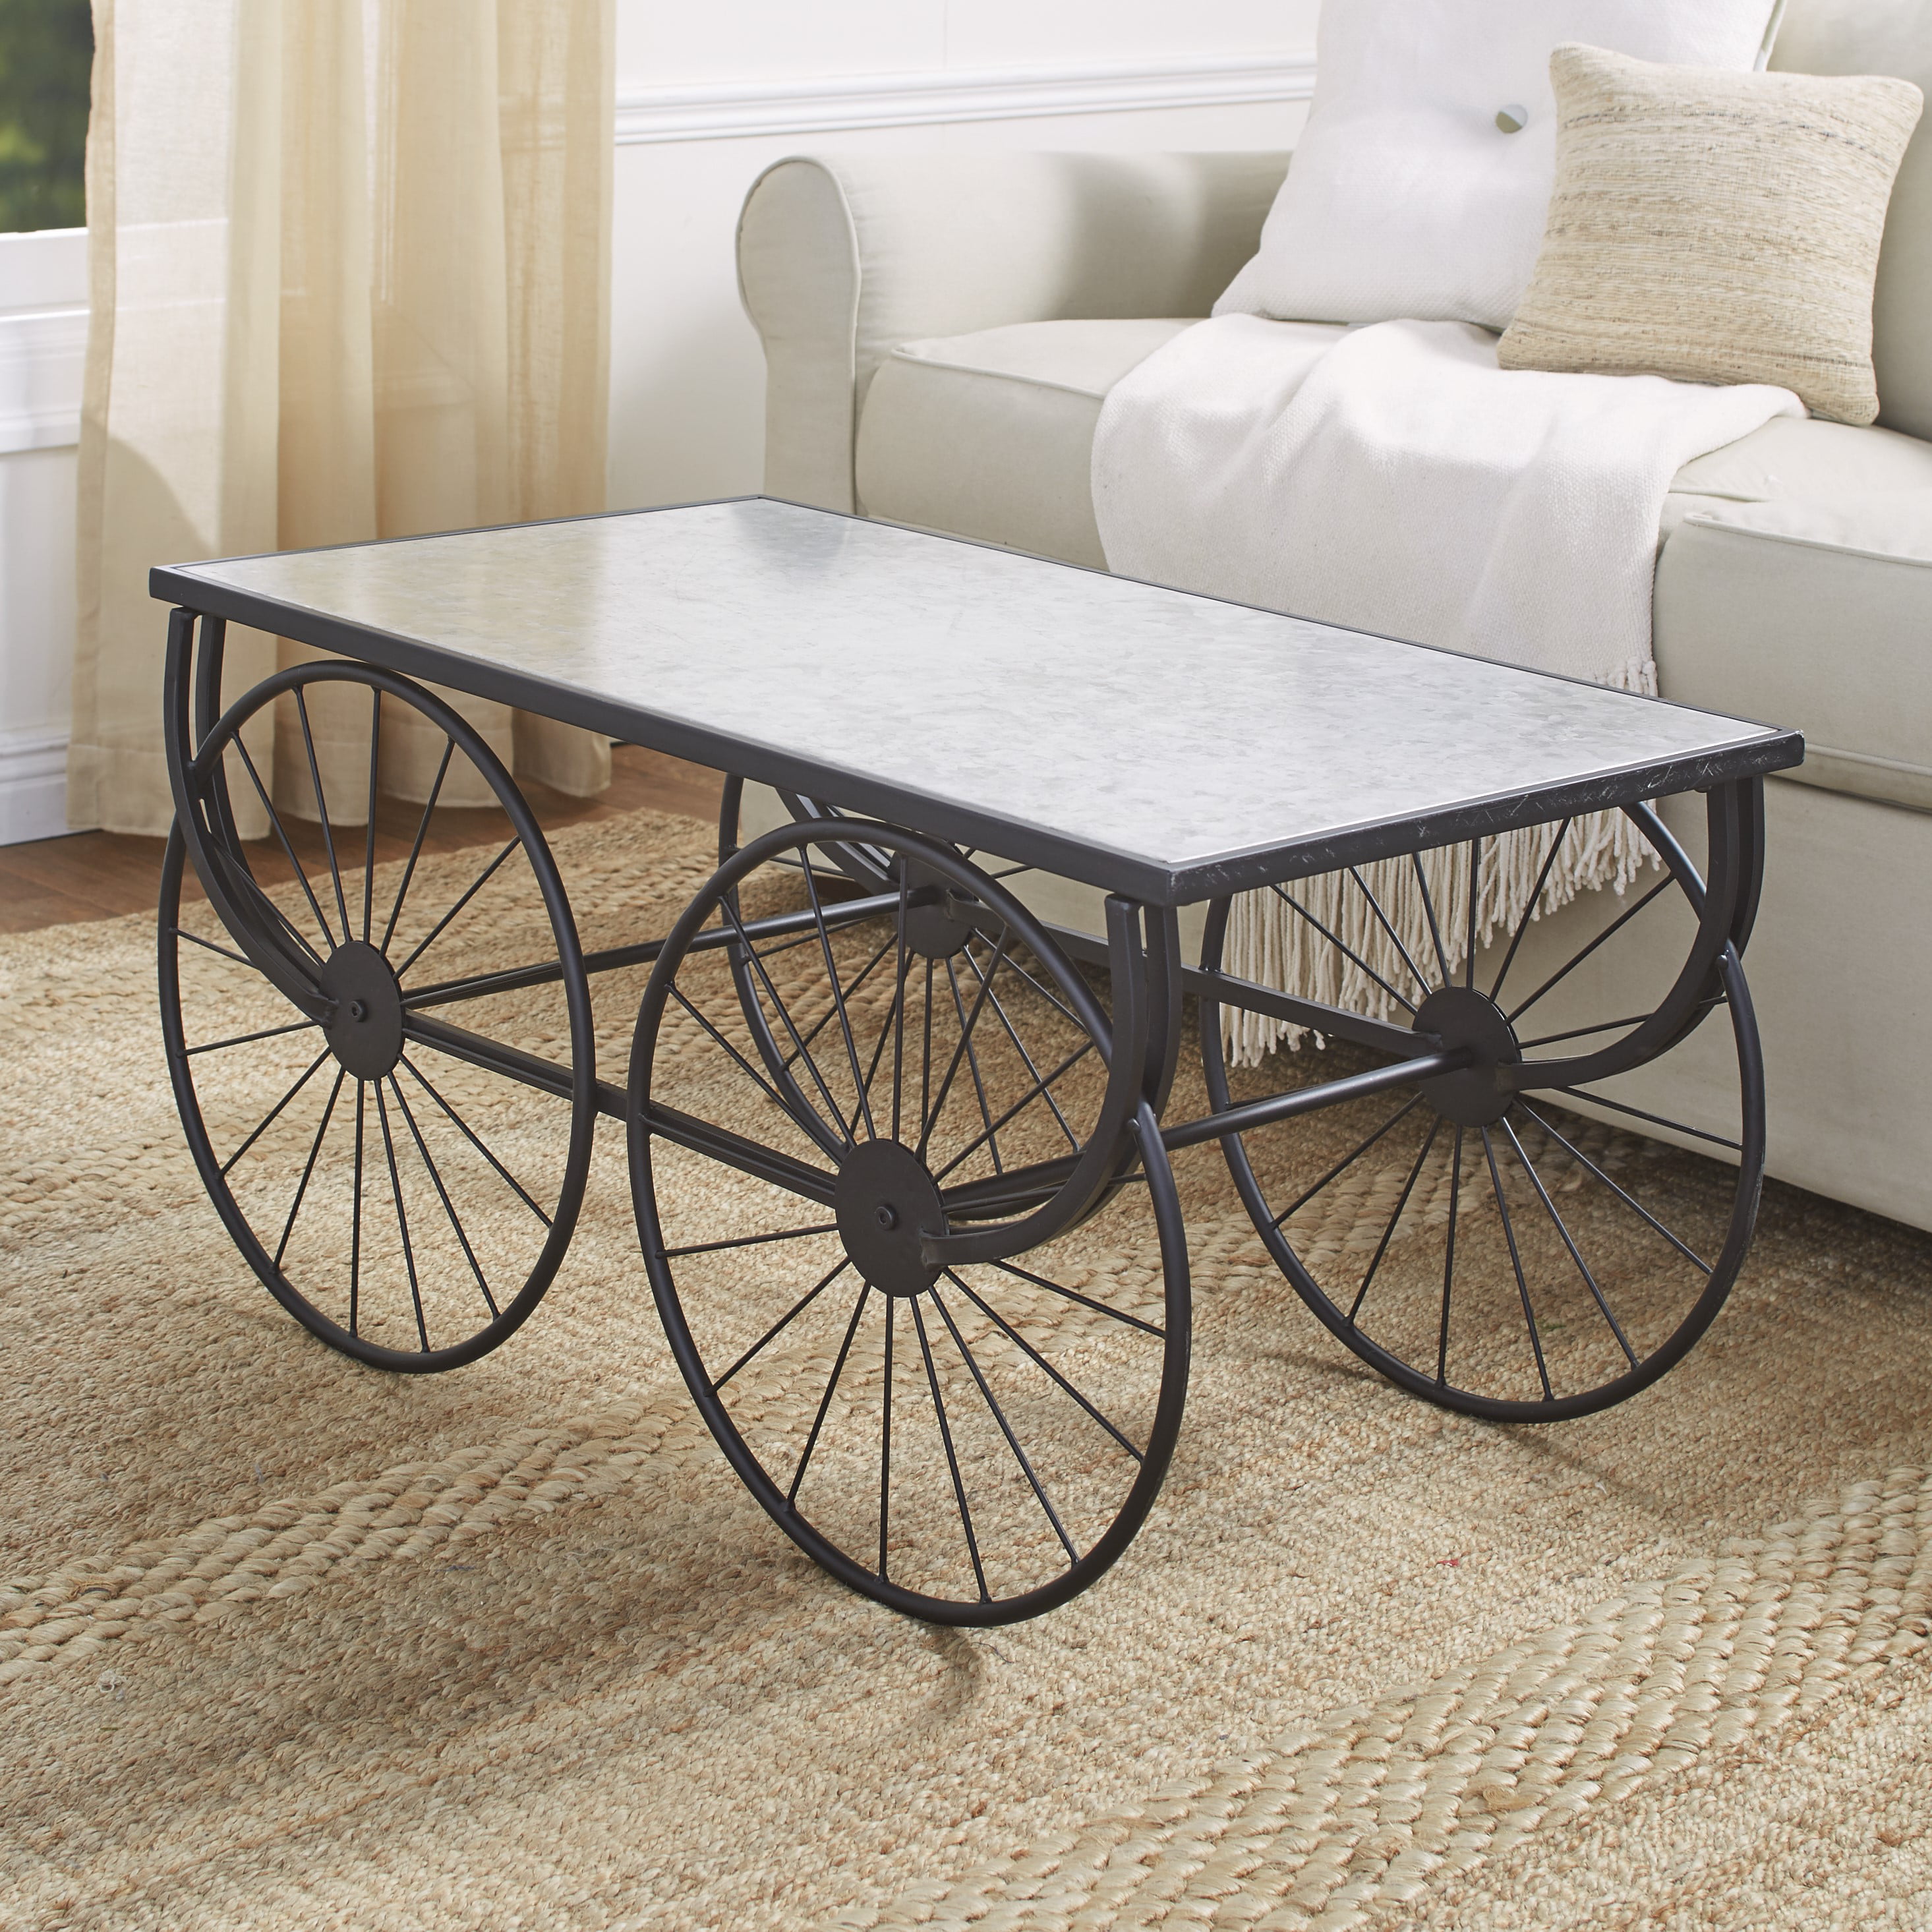 Wagon Wheel Coffee Table Galvanized Metal Farmhouse Rustic Furniture Home Decor 